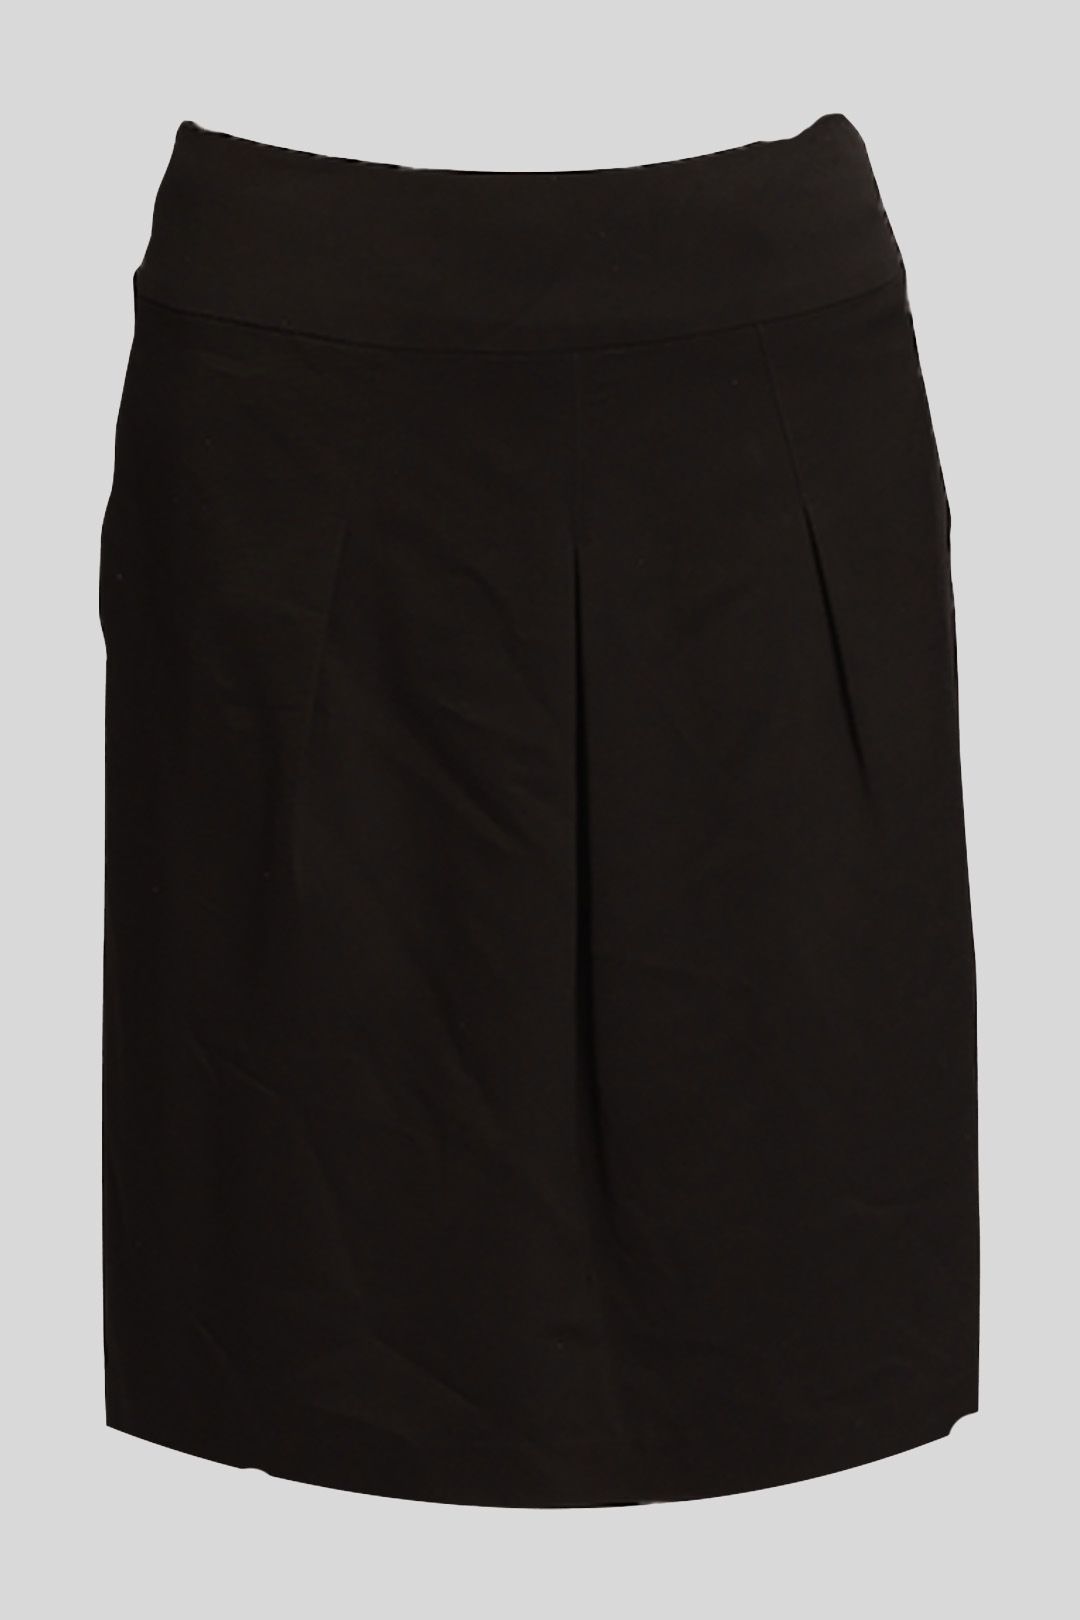 Oroton - Black A Line Skirt